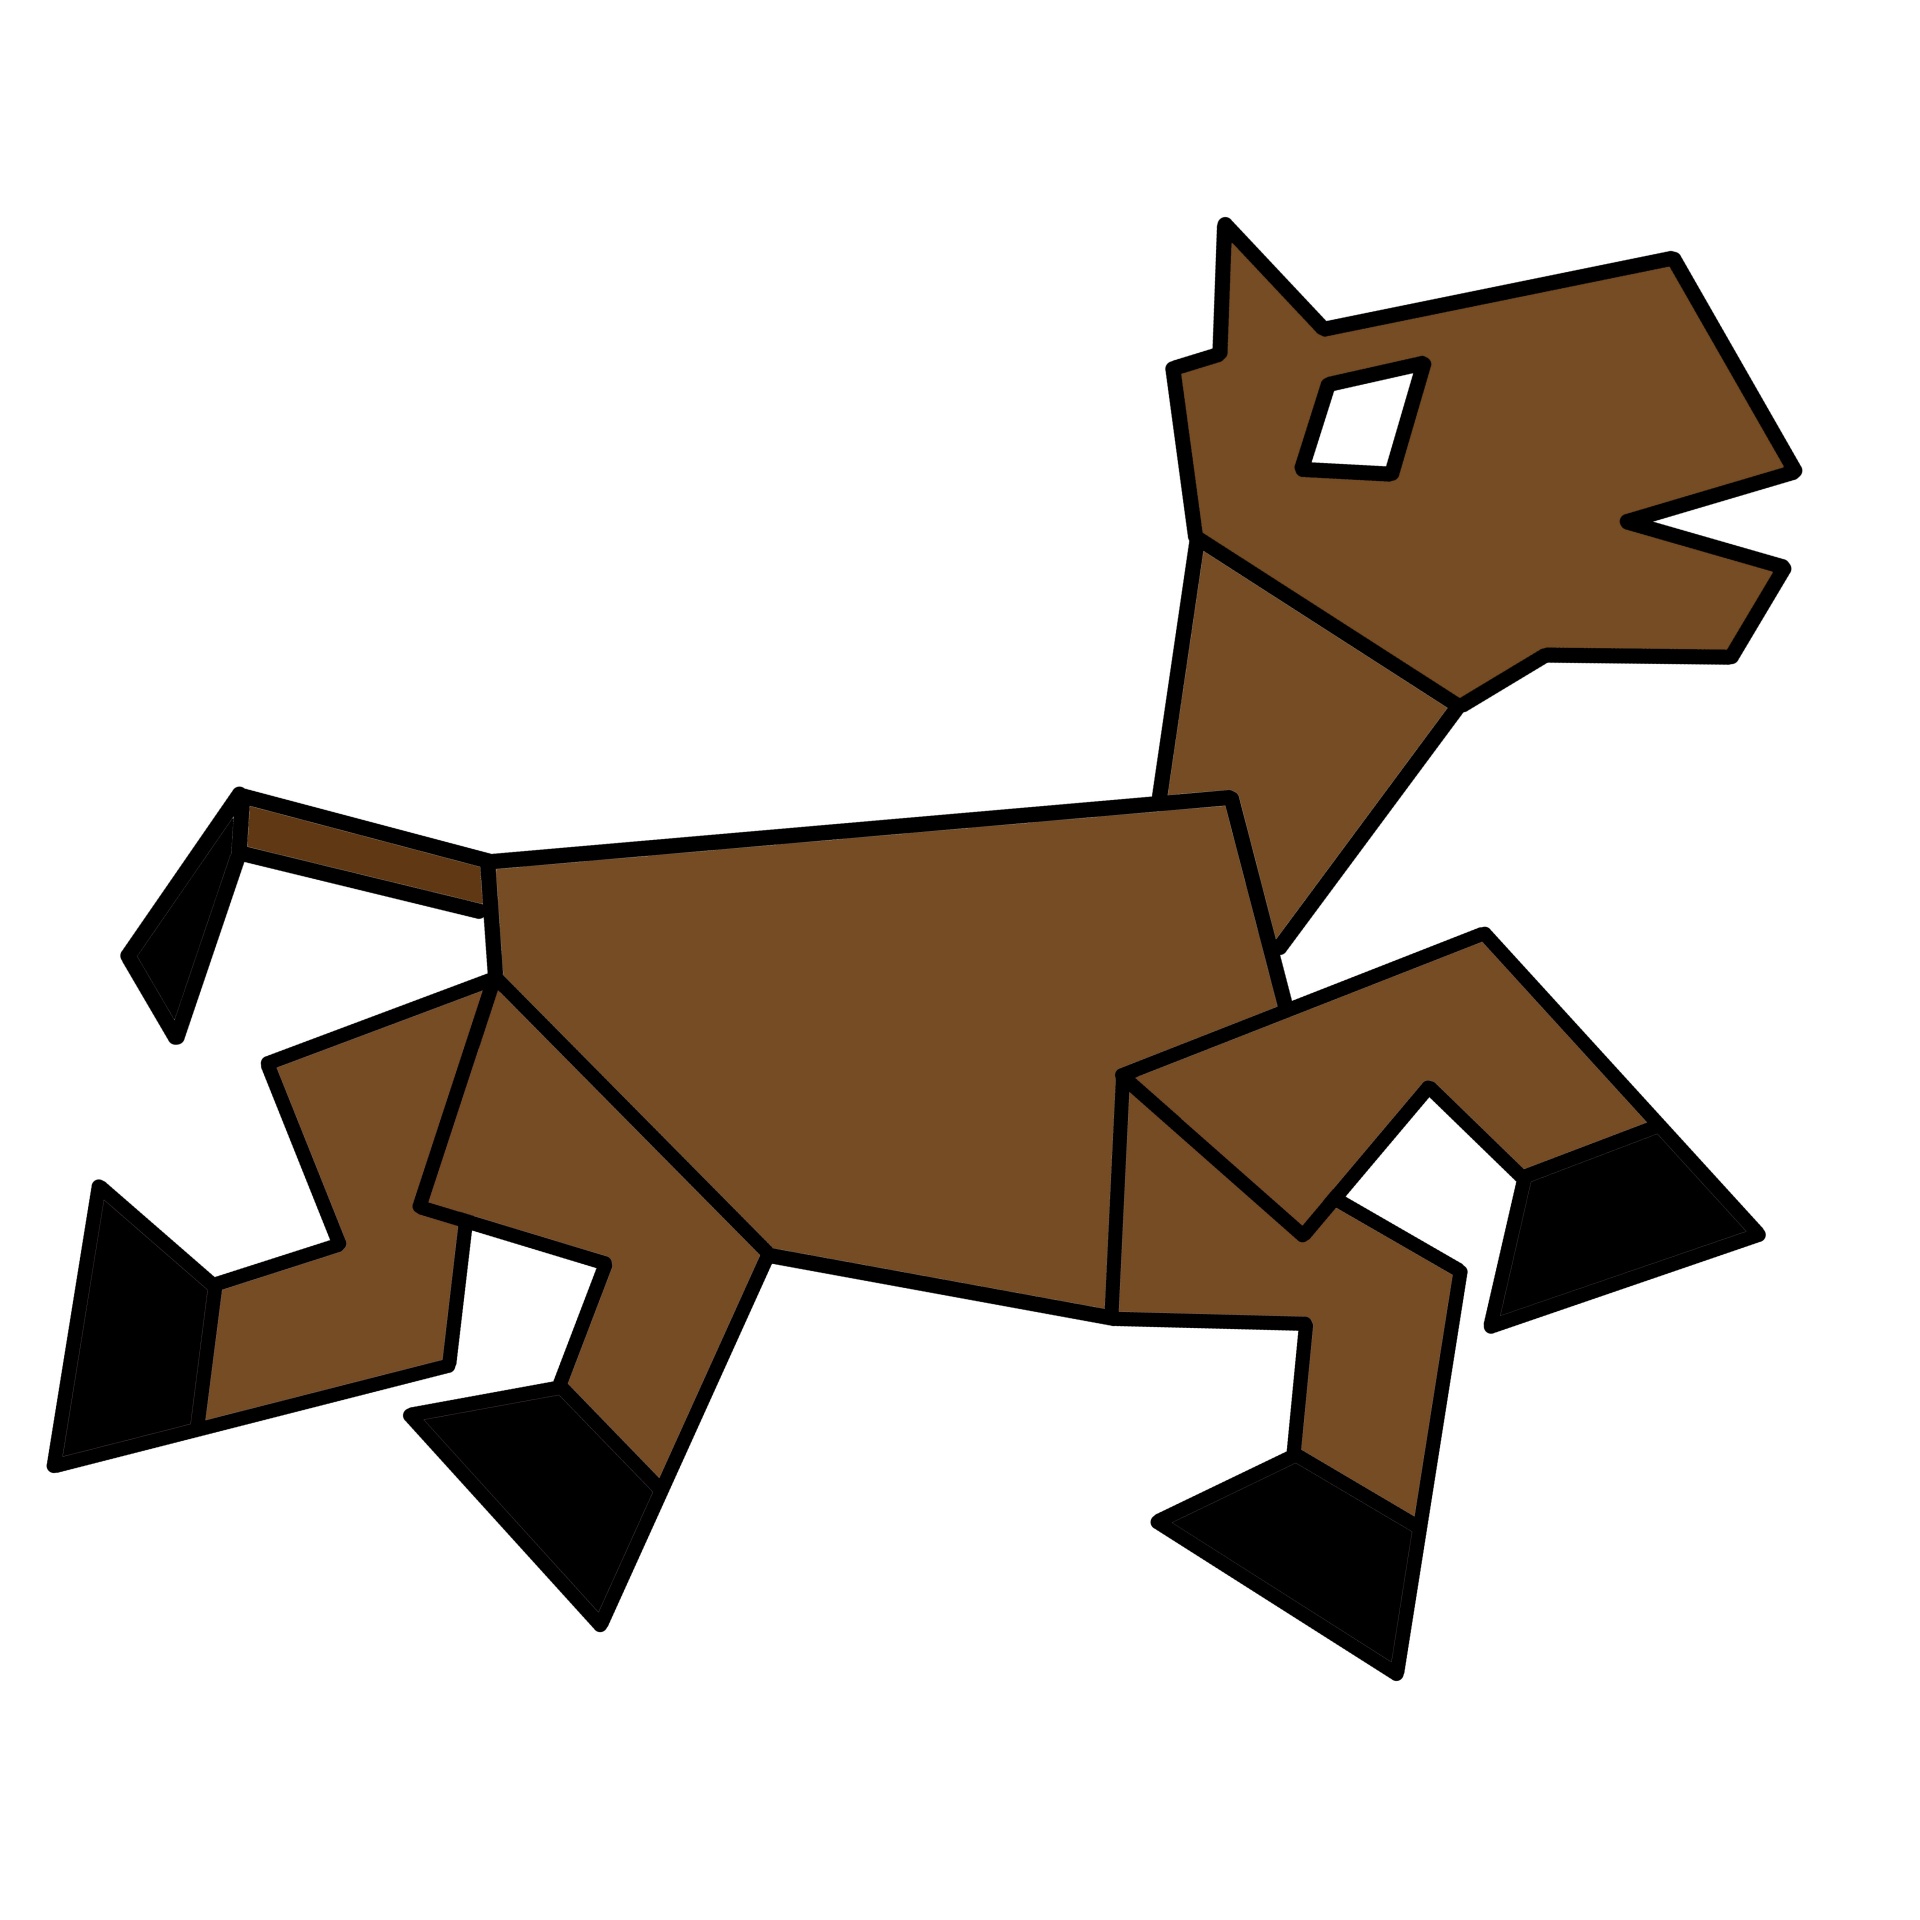 Galloping Horse